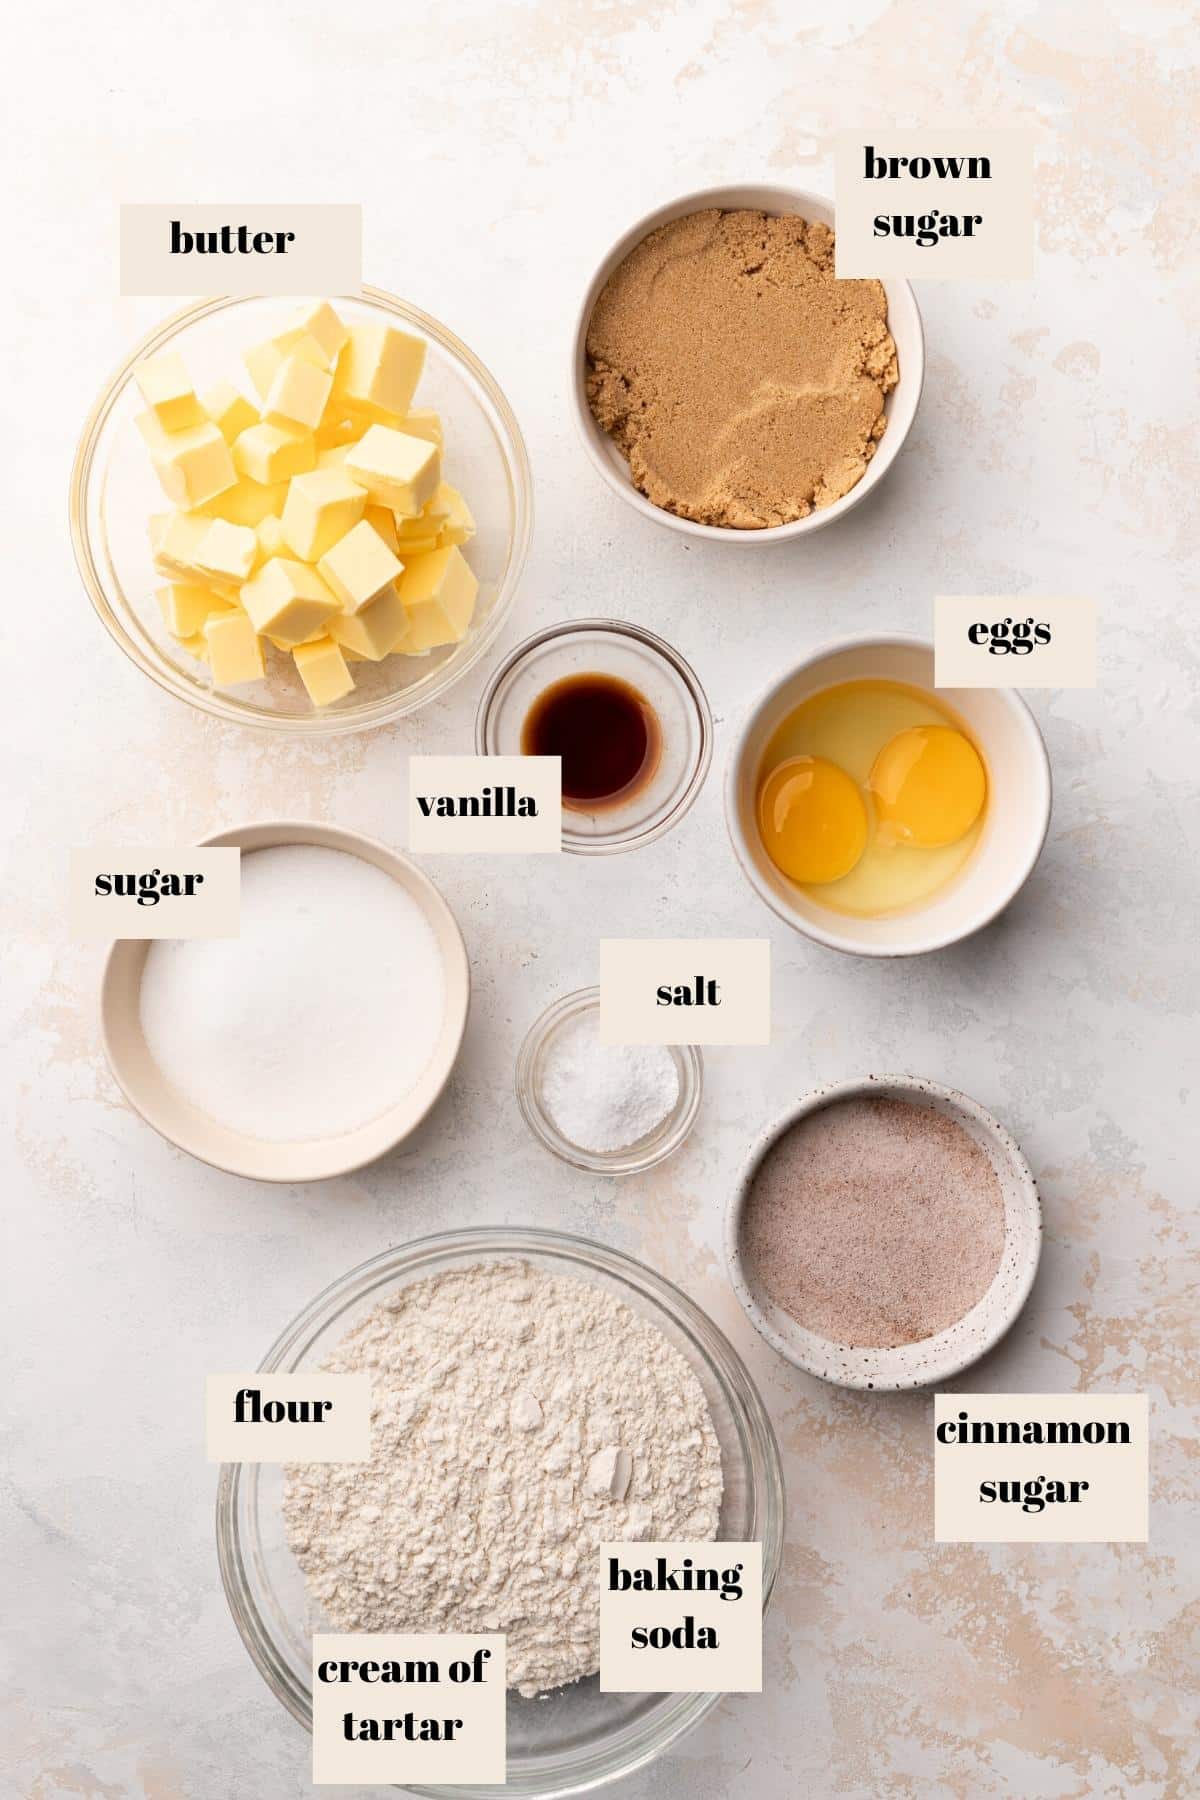 ingredients needed to make the snickerdoodle cookies.